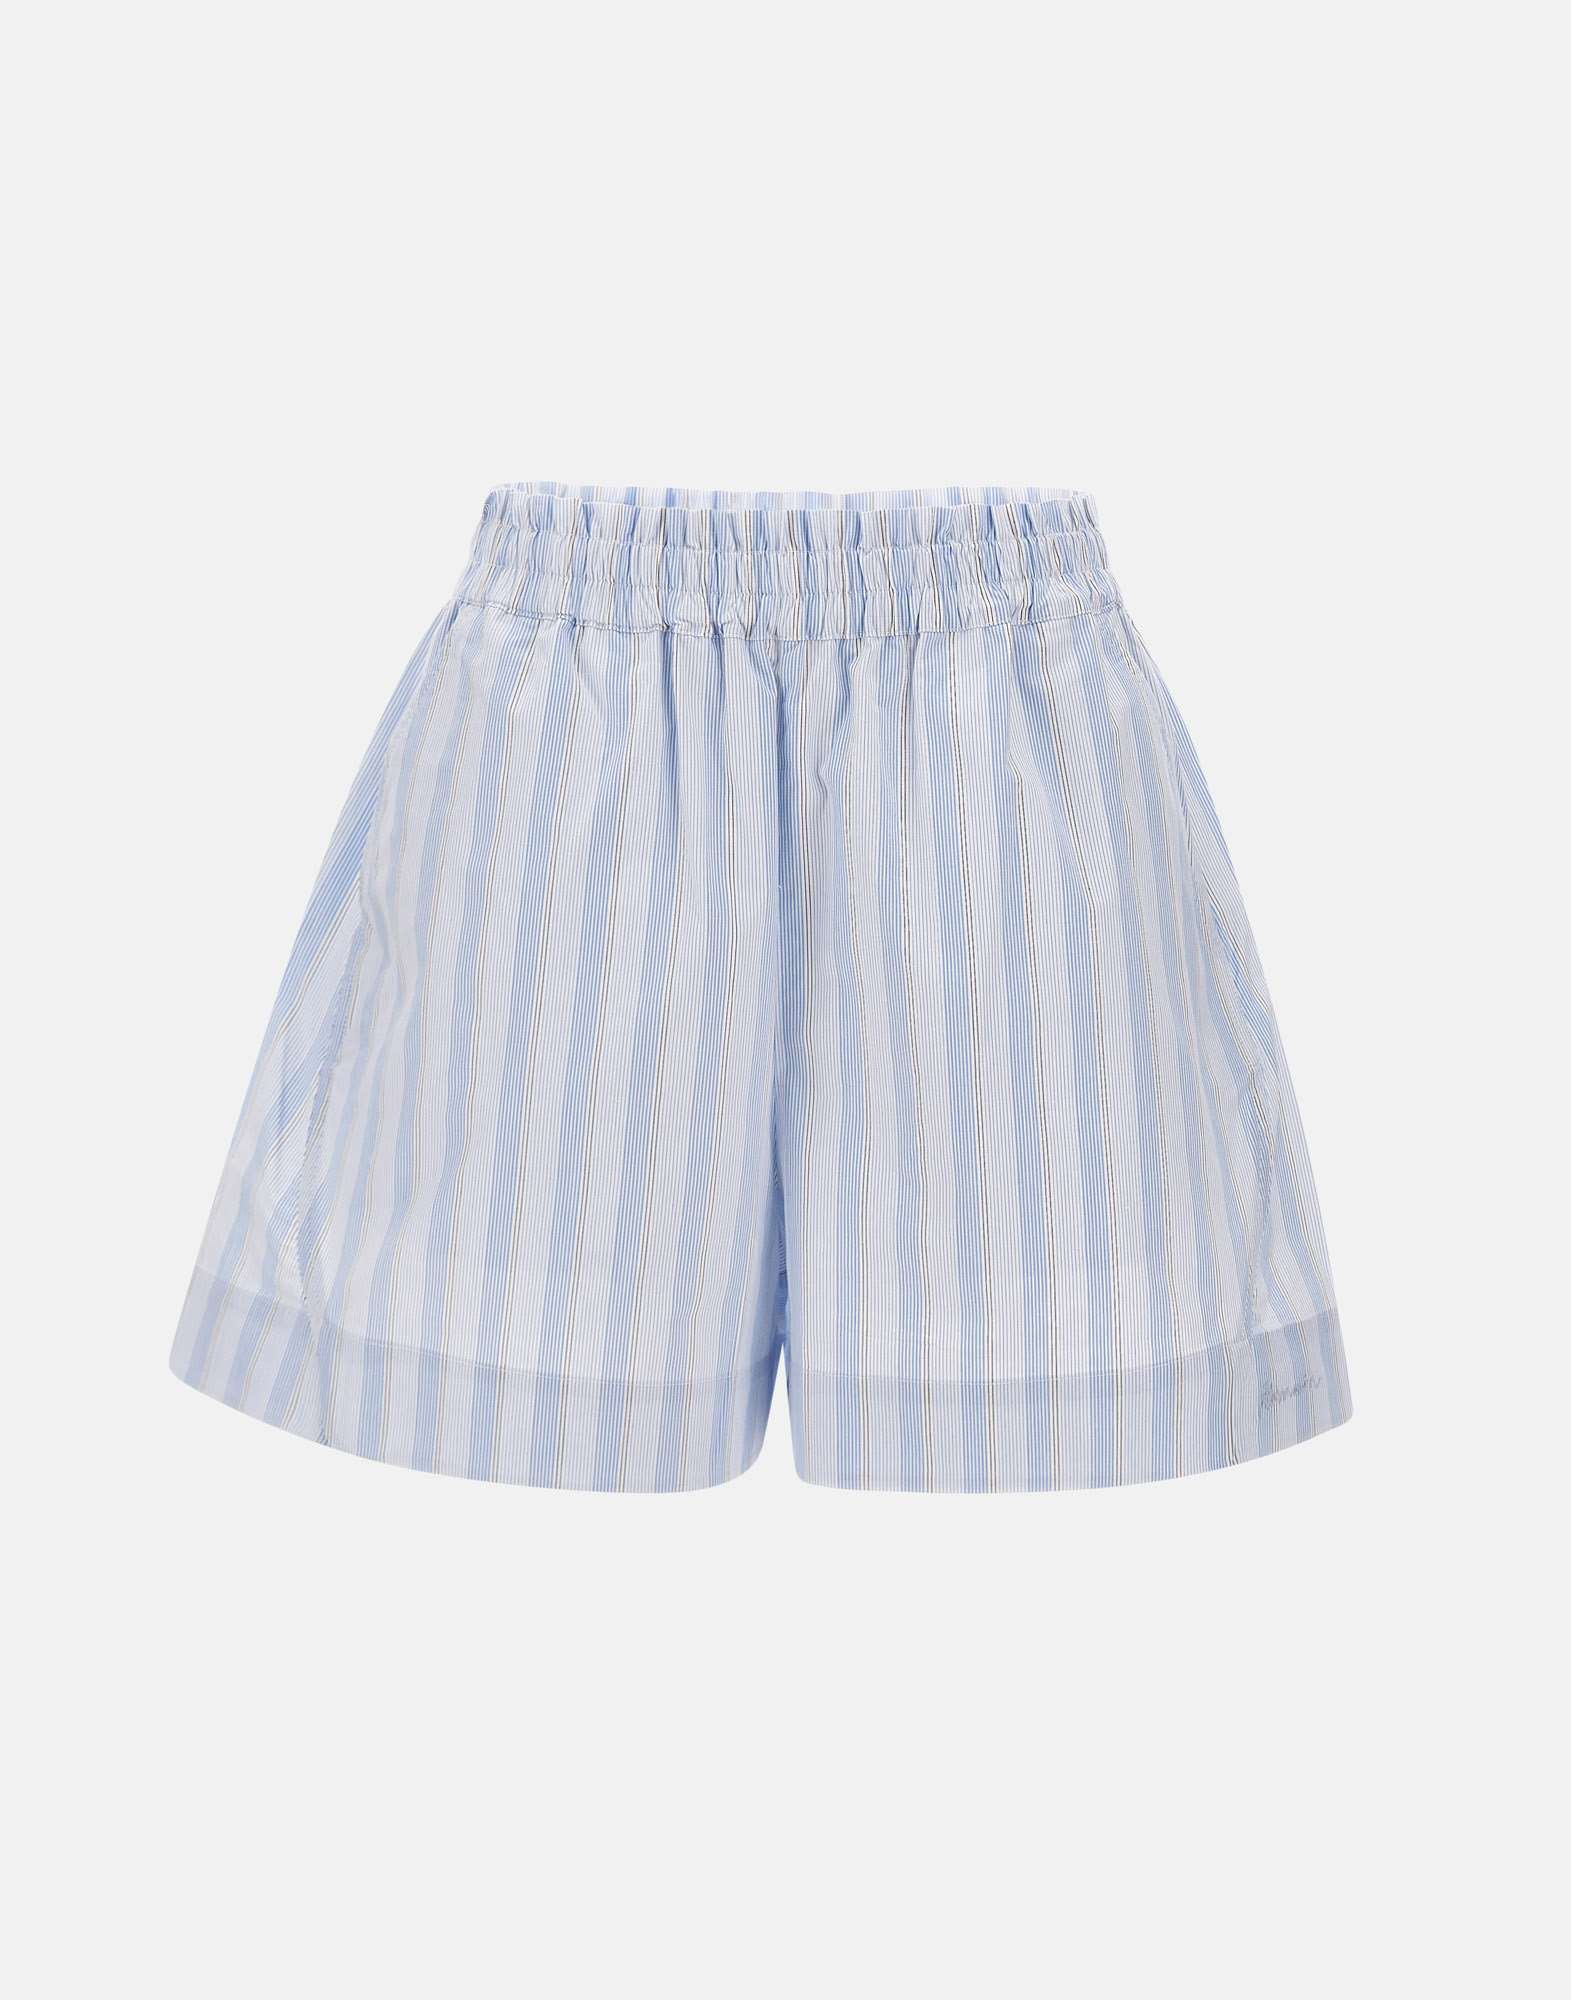 Remain Light Blue Striped Cotton Shorts